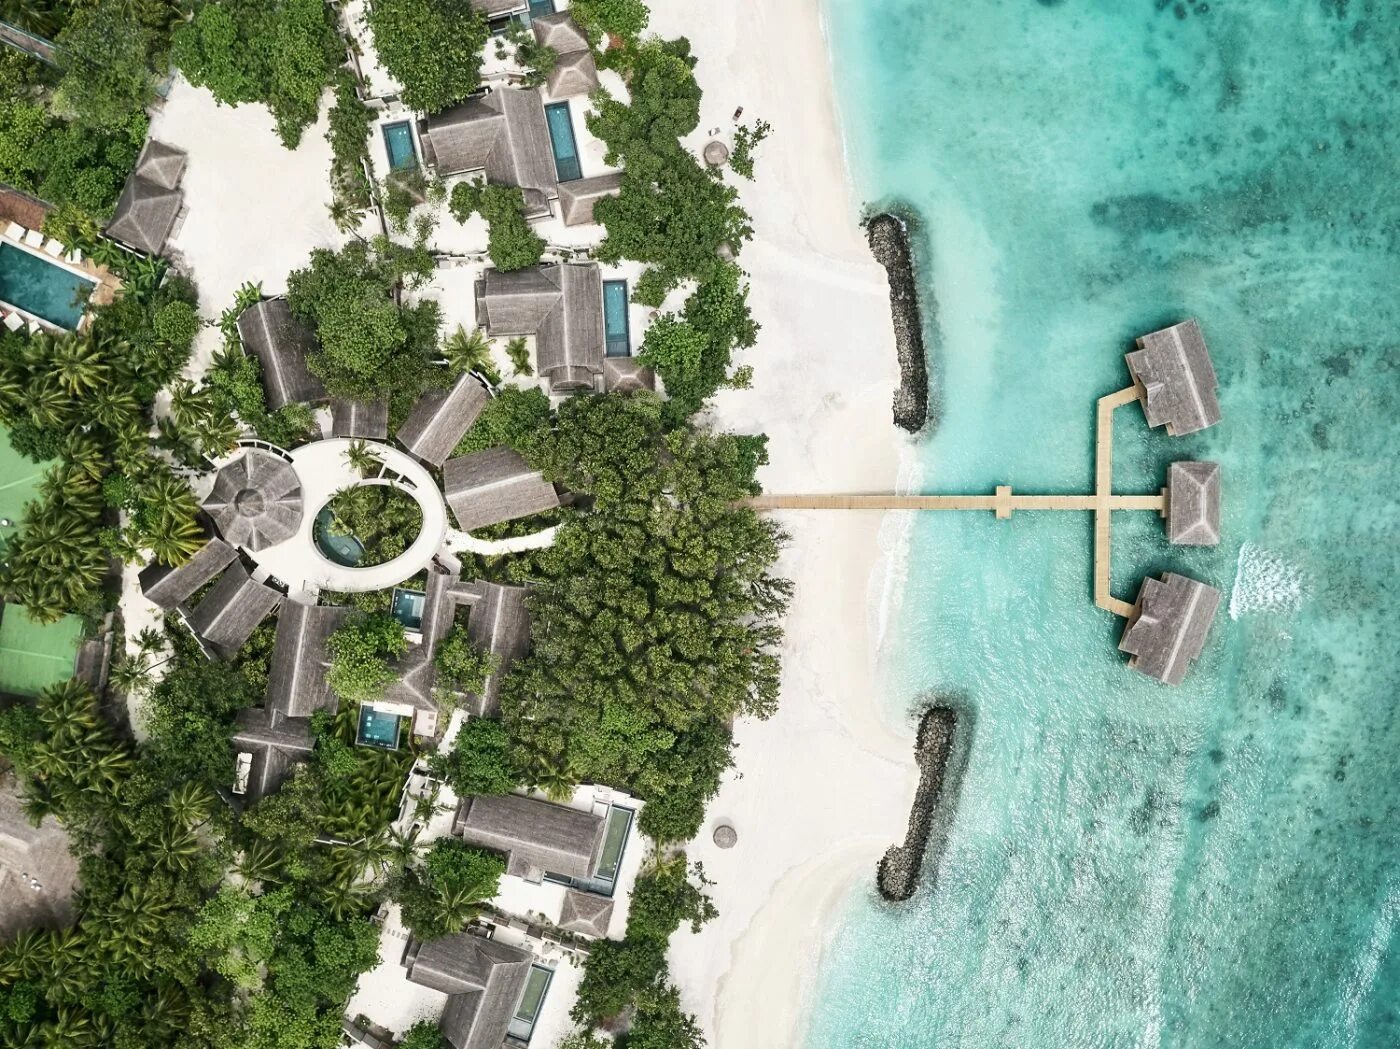 Joali being. Joali Maldives 5 карта отеля. Мальдивы Joali Maldives. Остров отеля Joali. Карта отеля Joali Maldives.